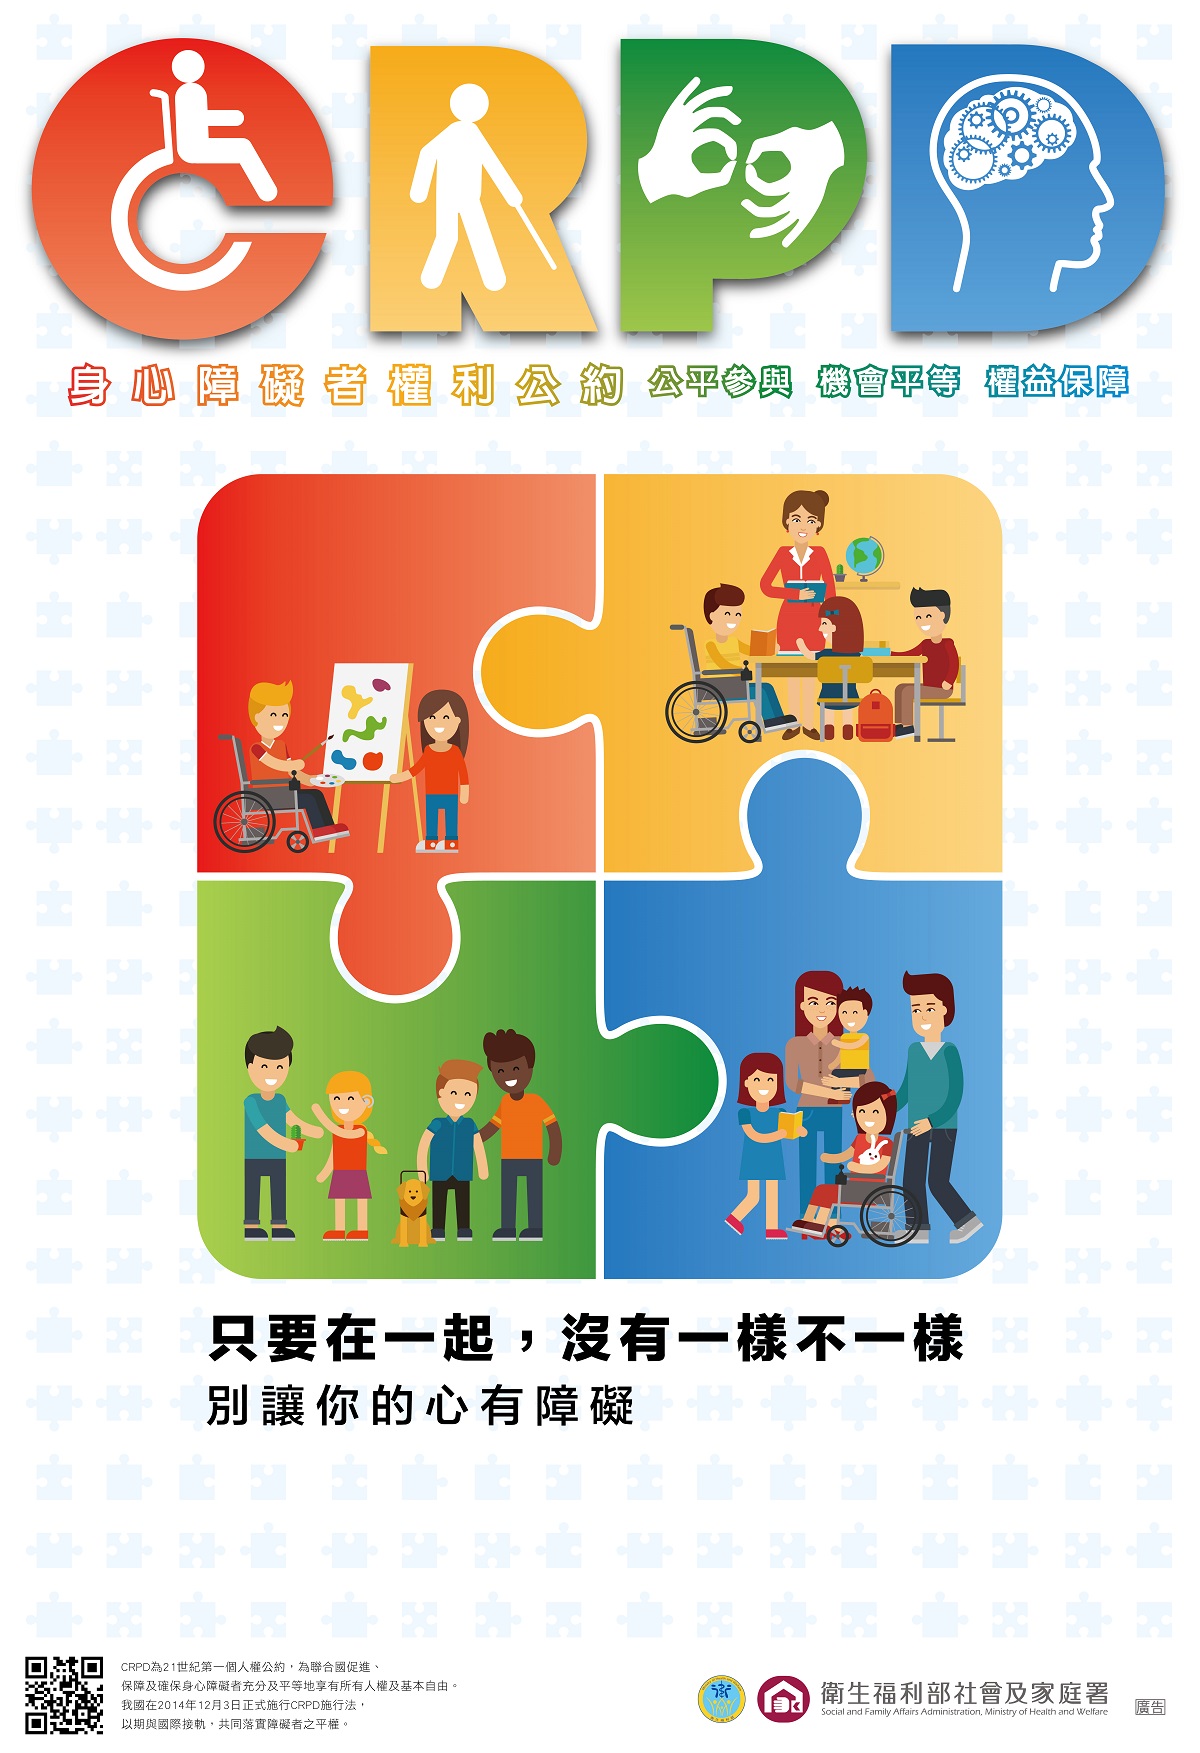 CRPD身心障礙者權利公約兒童版海報